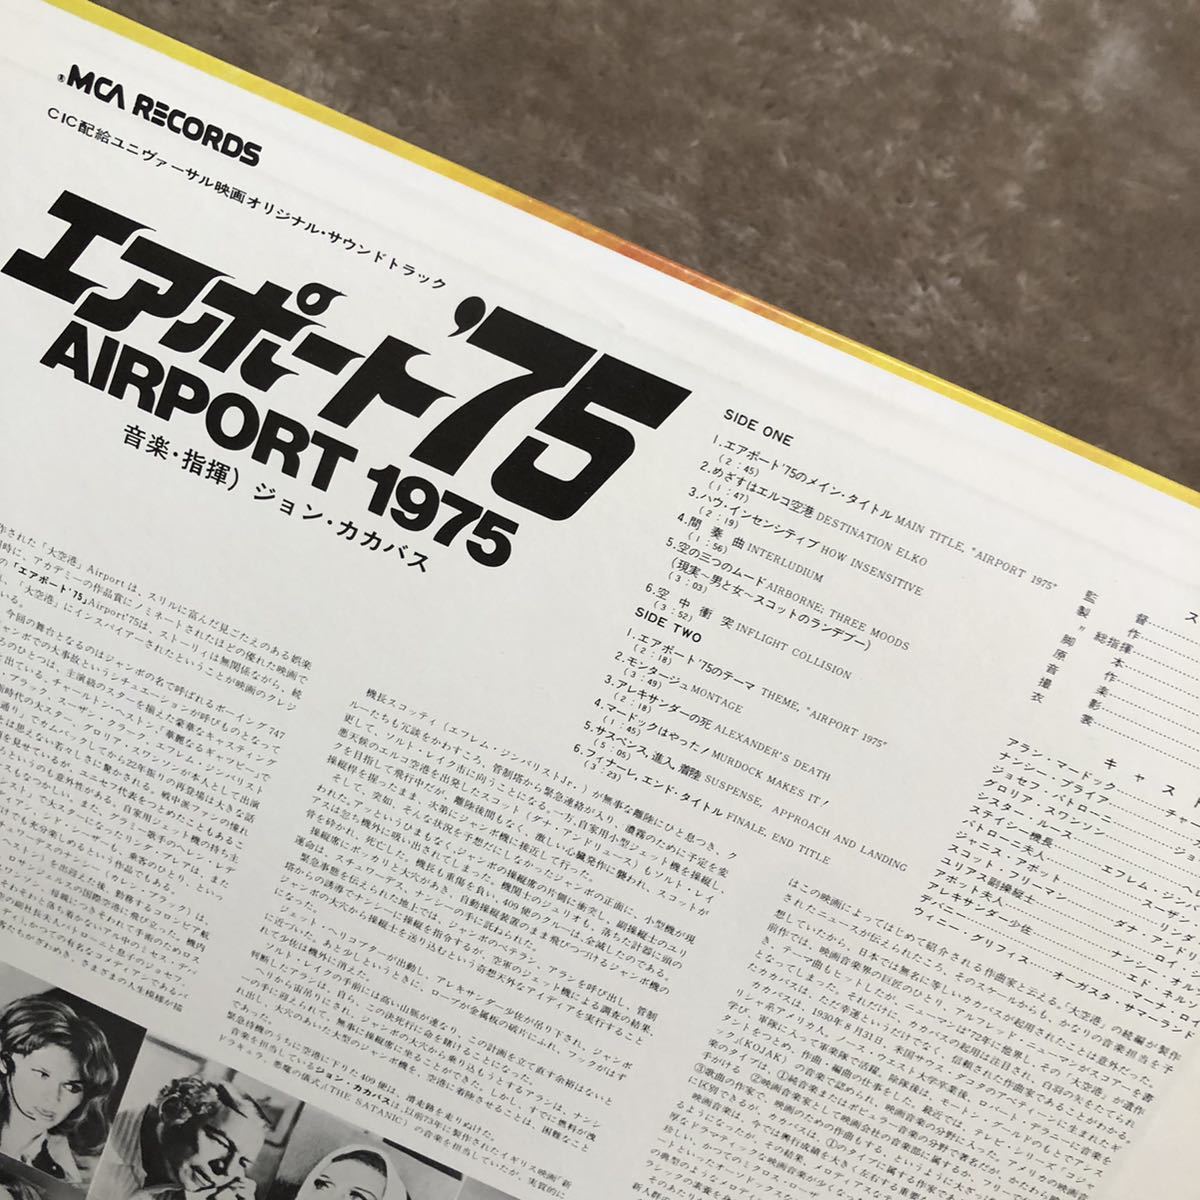 [ domestic record ] air port 75 original soundtrack John ka hippopotamus sAIRPORT1975 / LP record / MCA7159 / movie soundtrack /